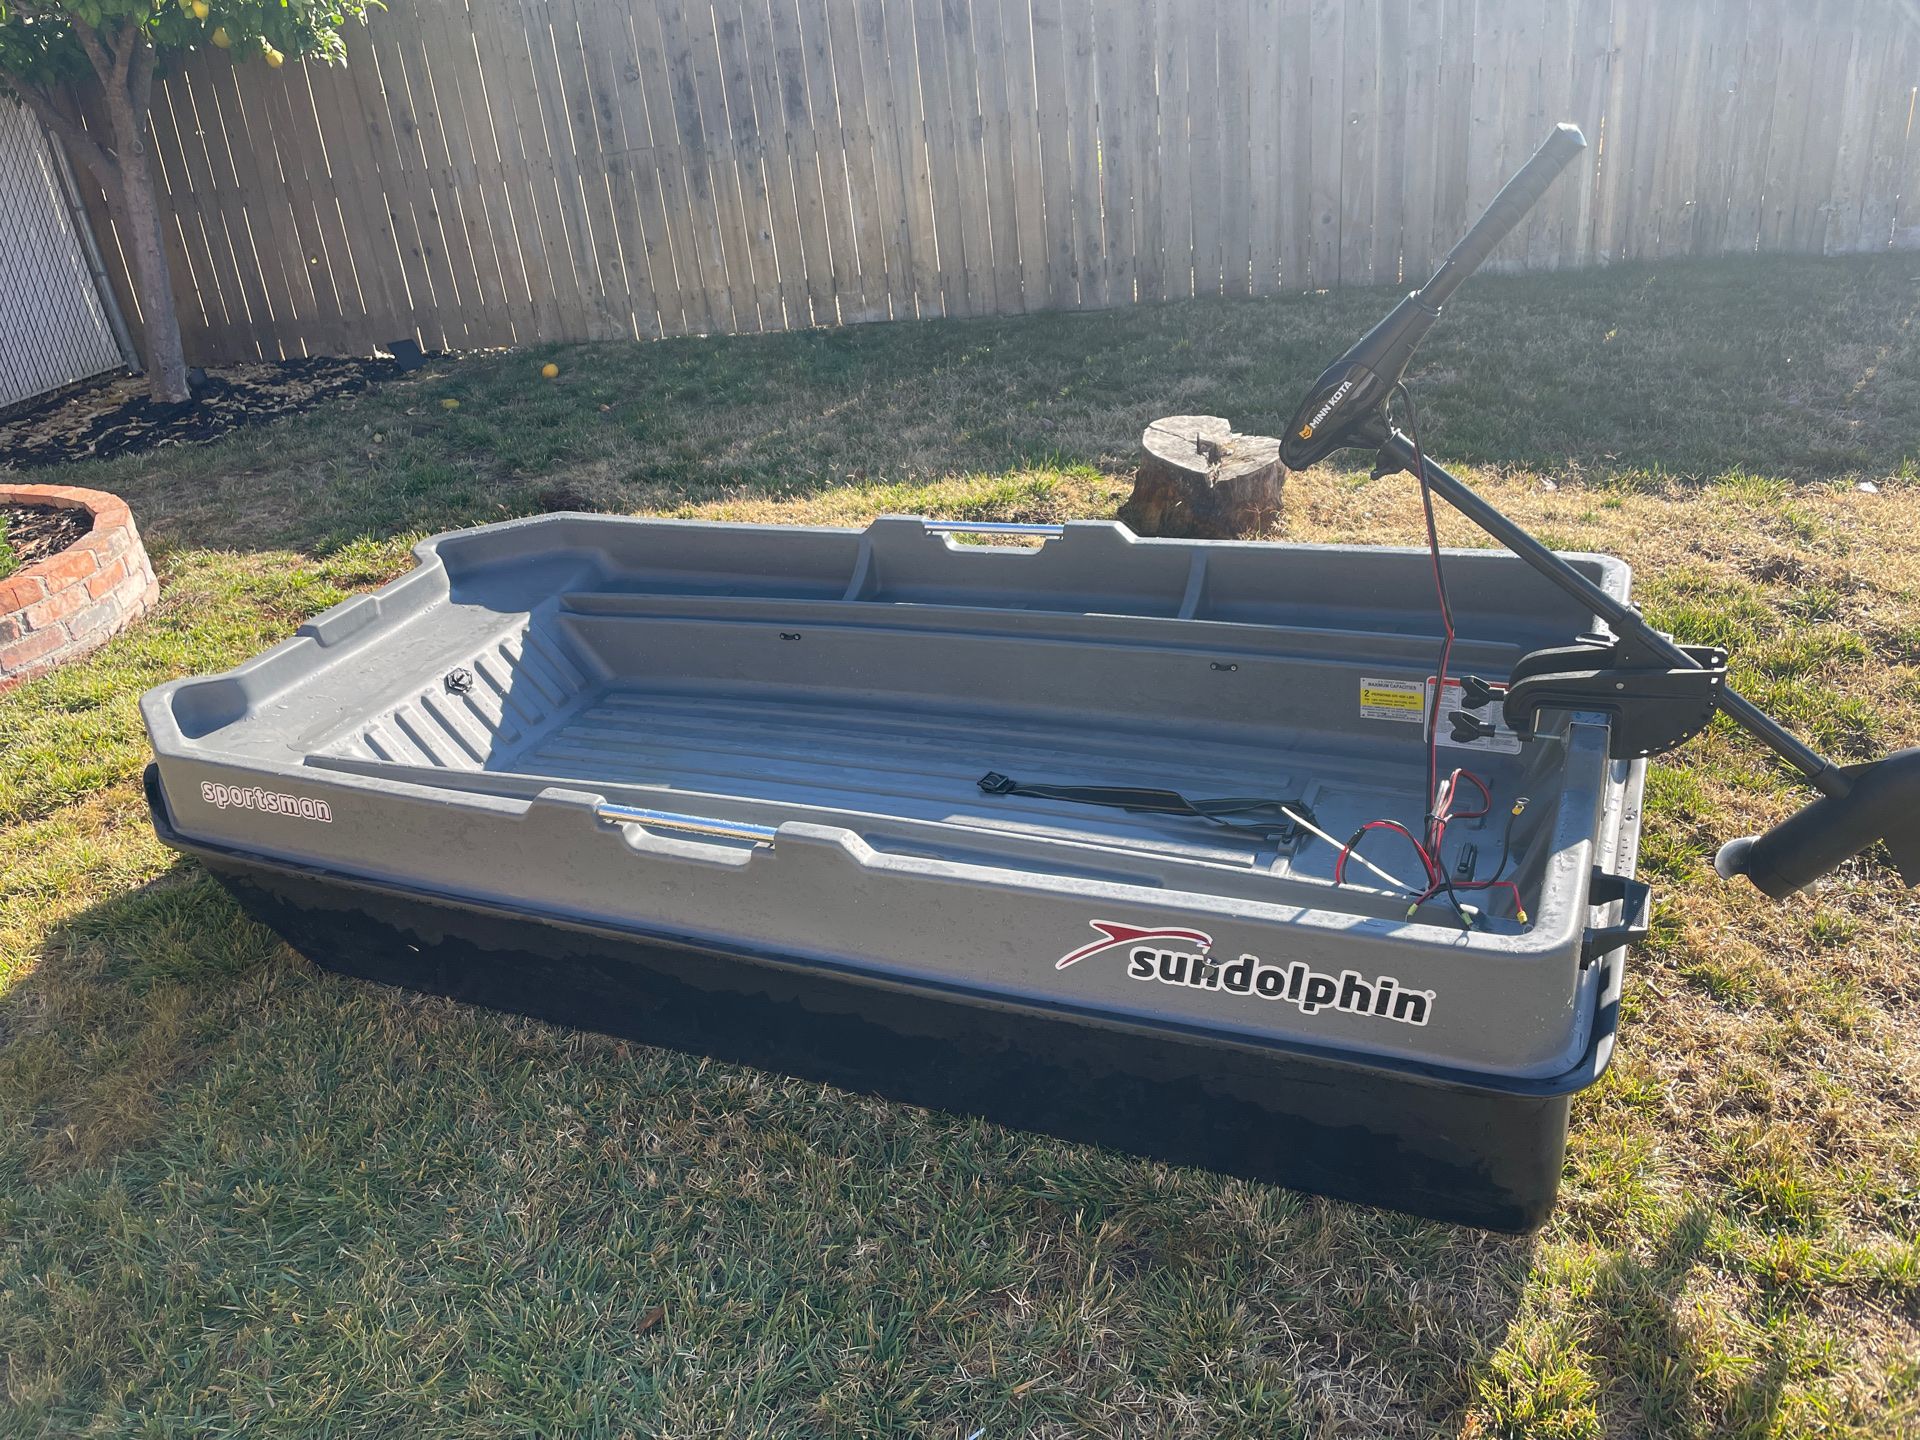 Sportsman electric fishing boat $$$ 600 $$$